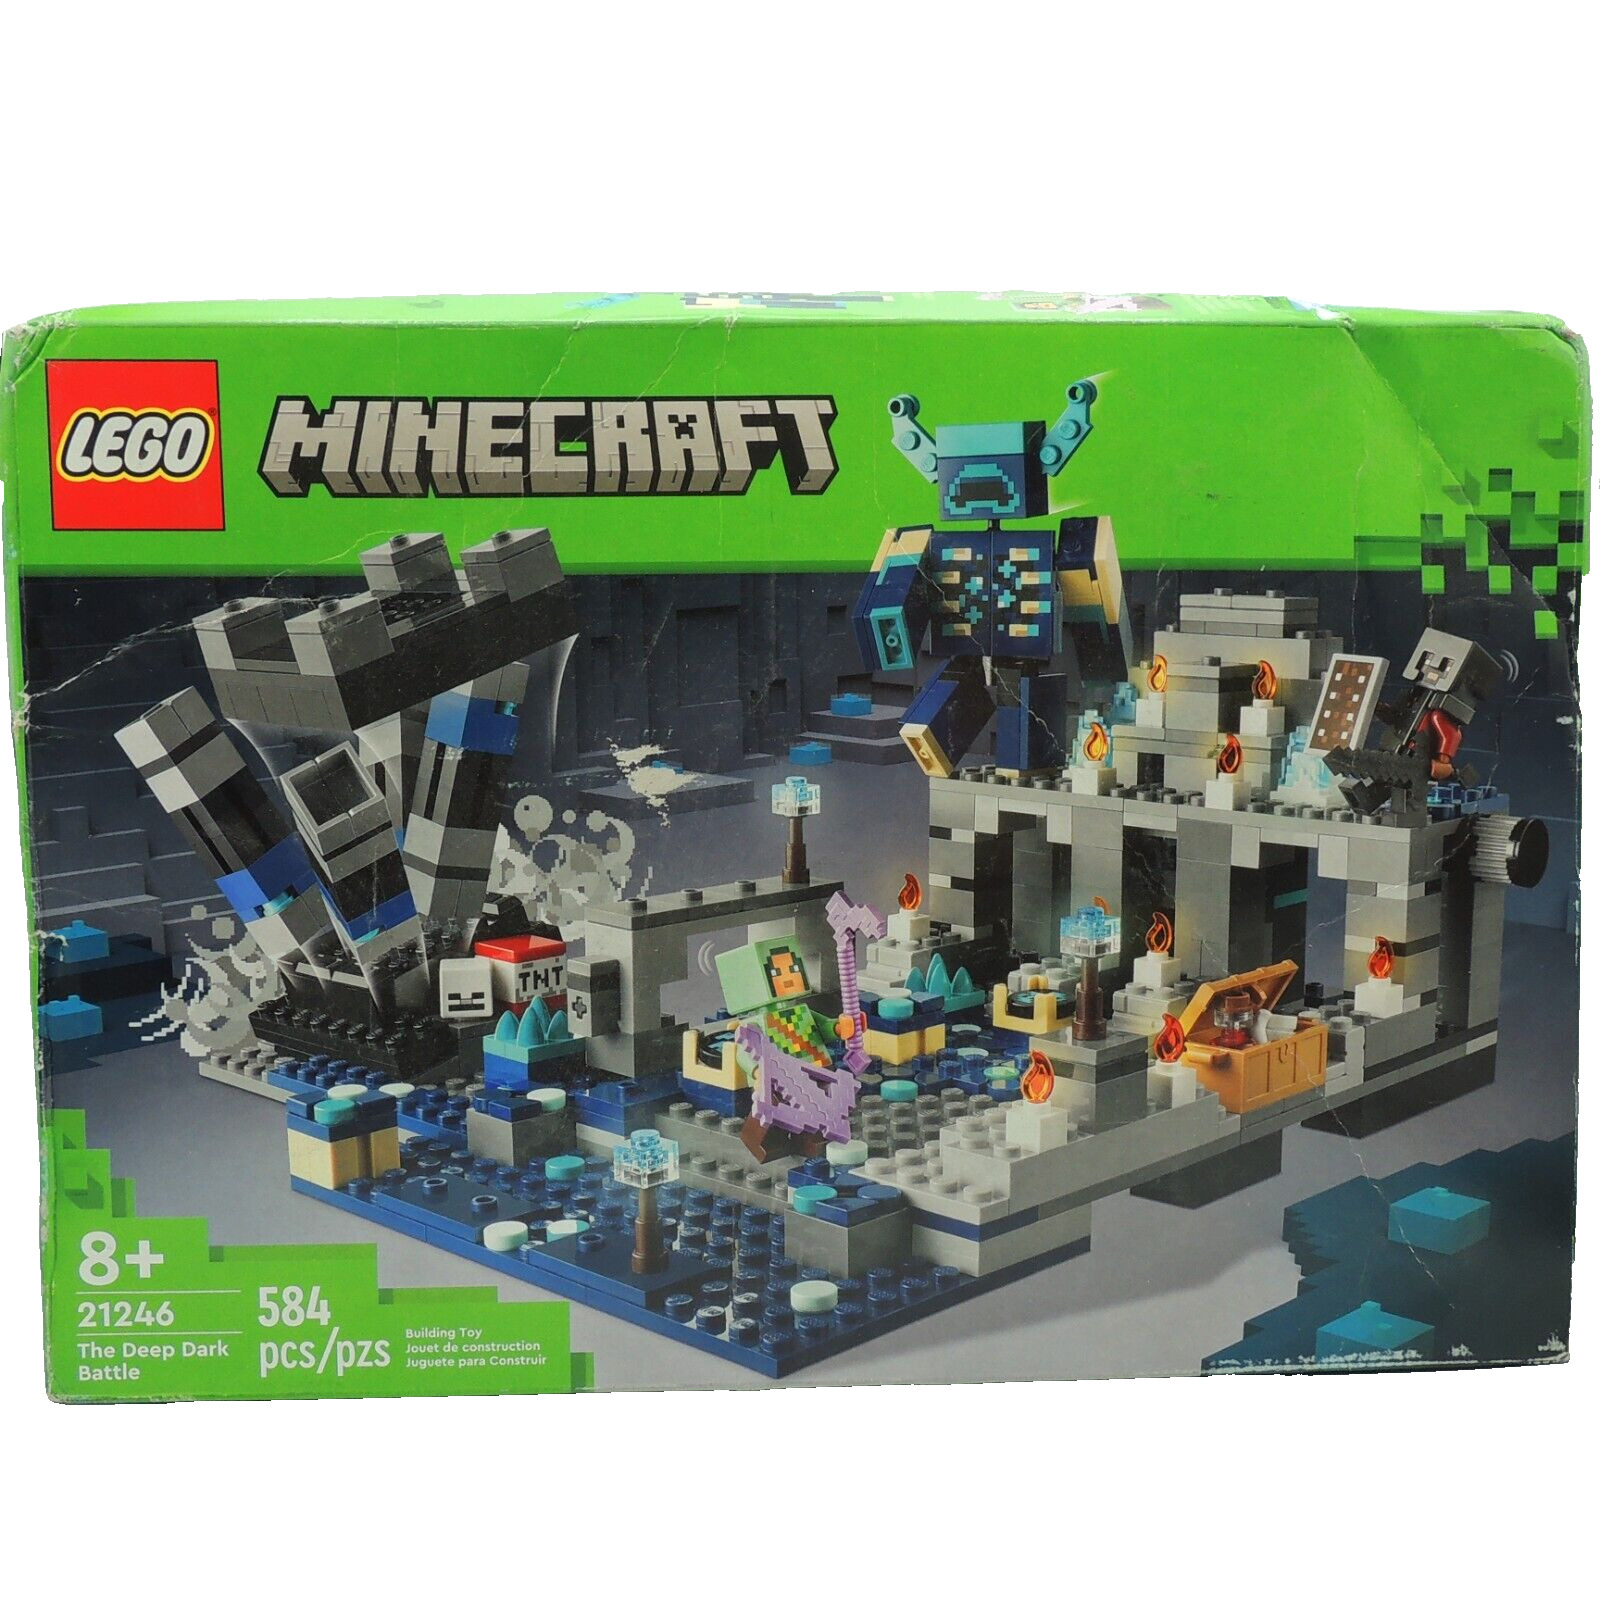 LEGO 21246 MINECRAFT The Deep Dark Battle  Lot #2